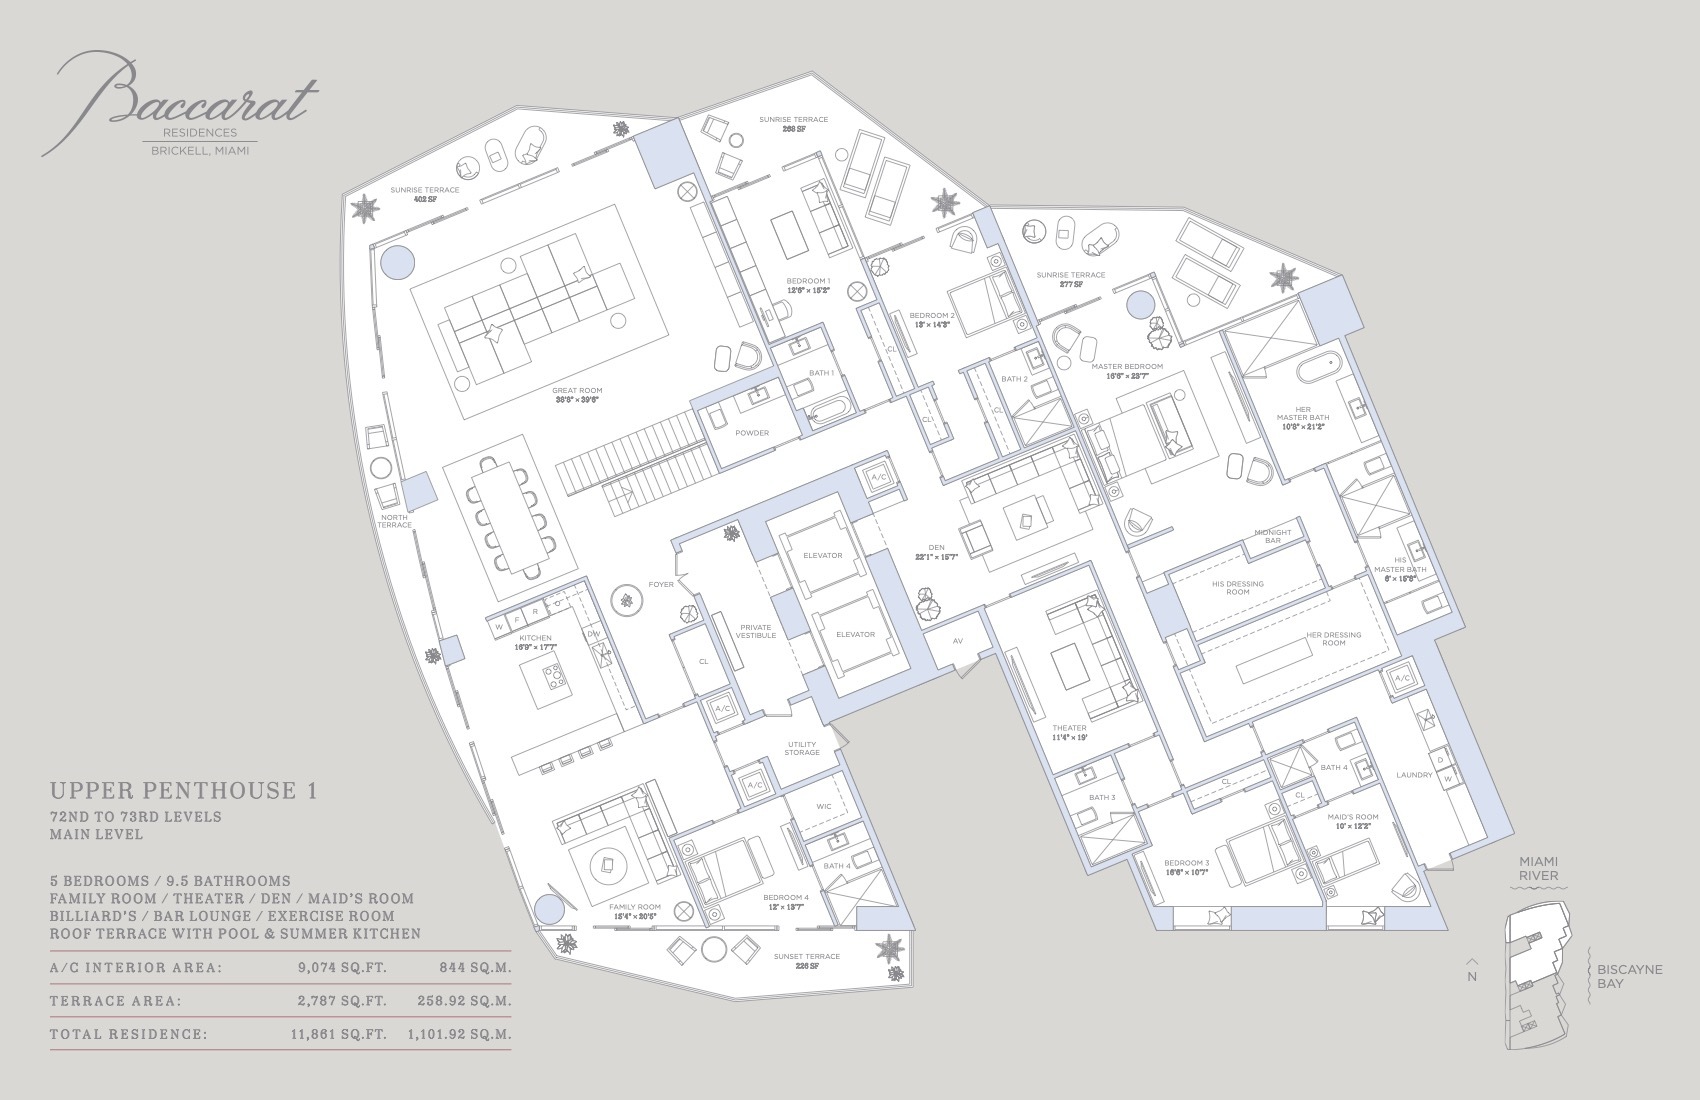 Floor Plan for Baccarat Brickell Floorplans, Upper Penthouse 1